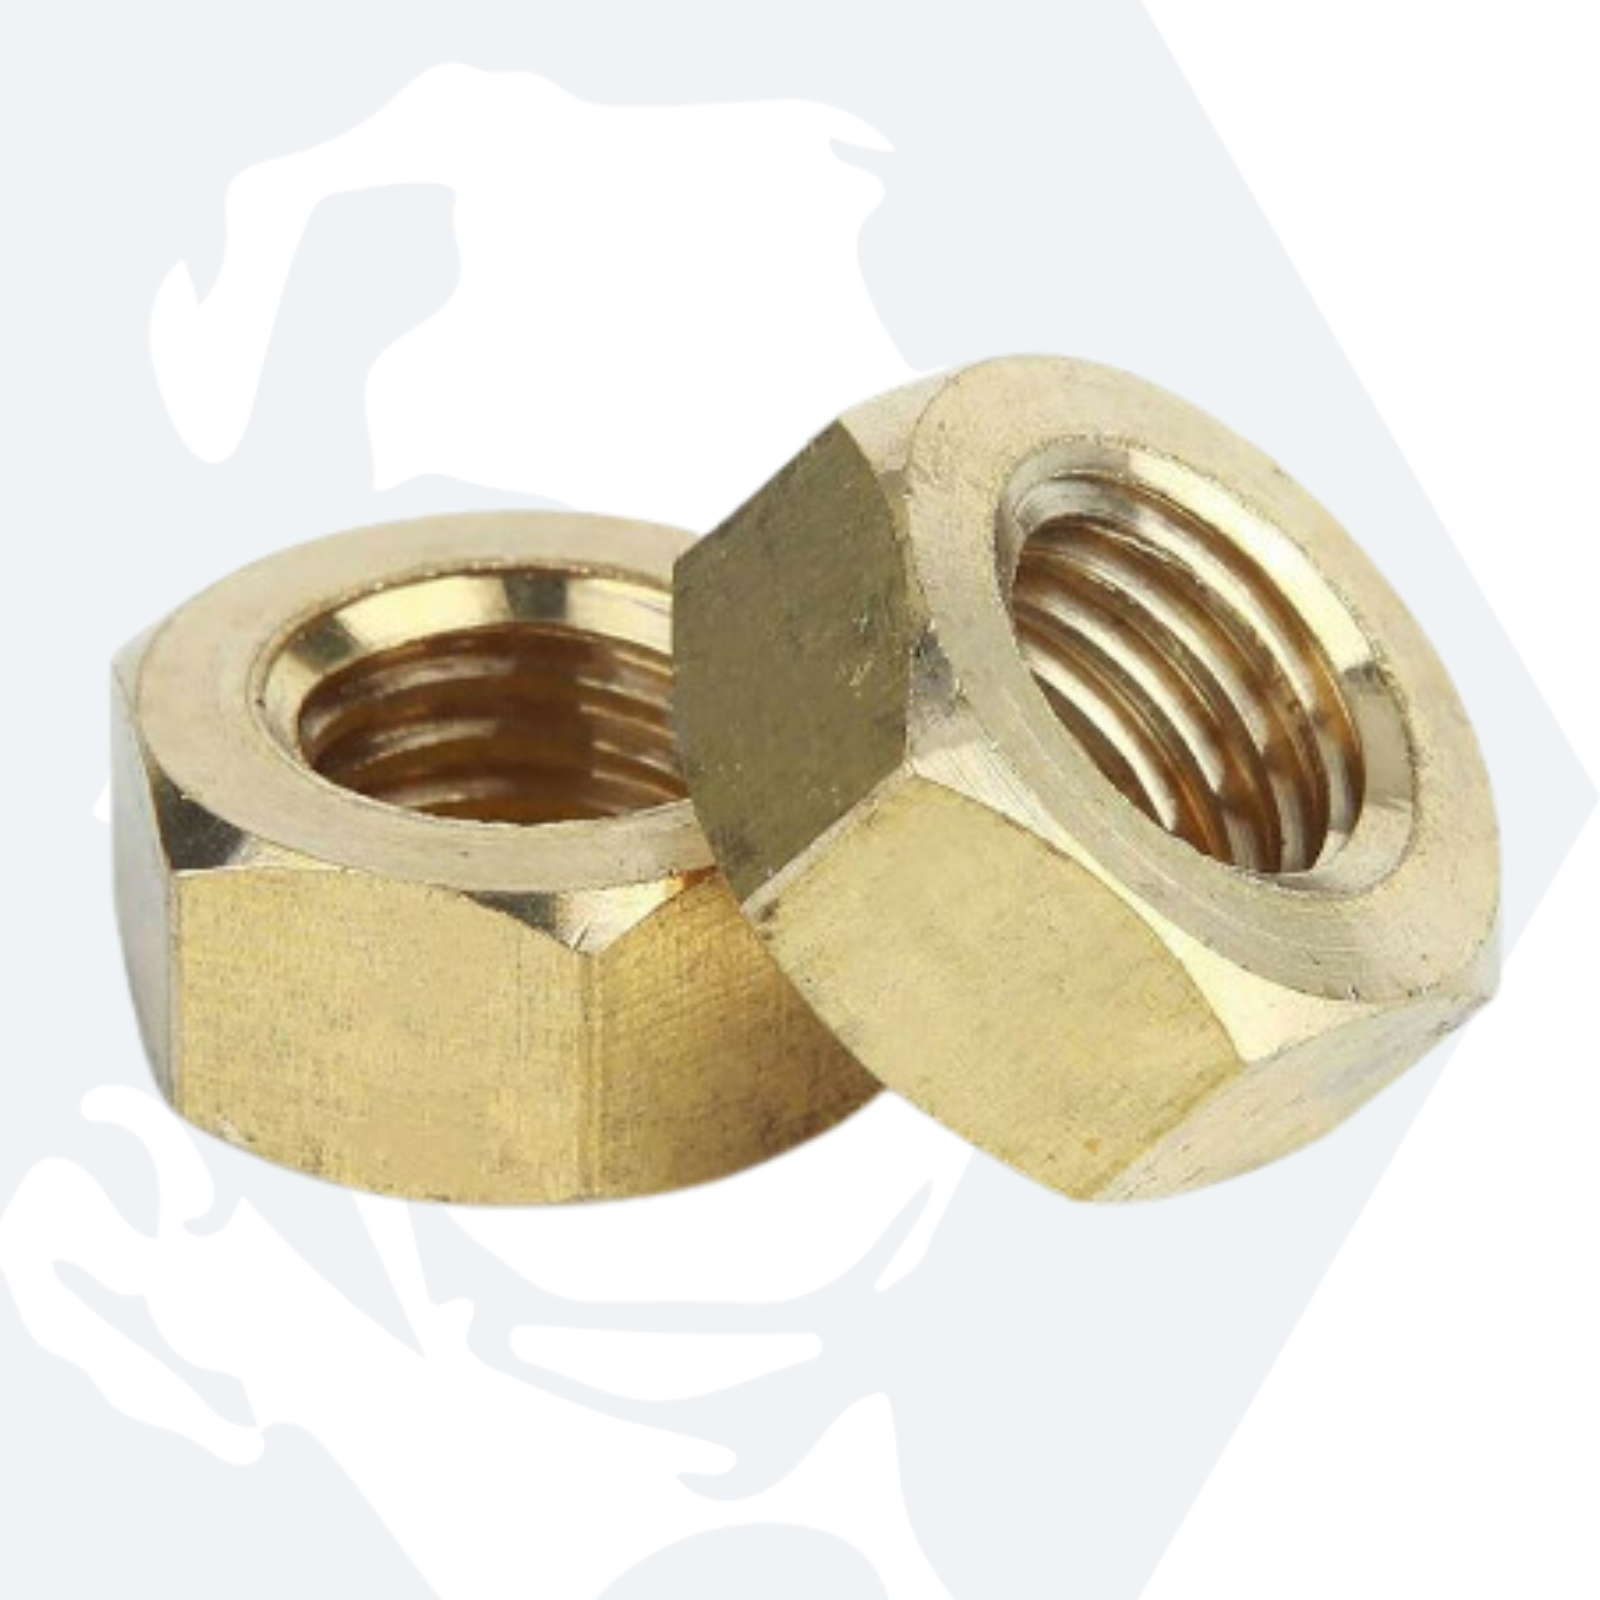 M6 Hexagon Nuts (DIN 934) - Brass